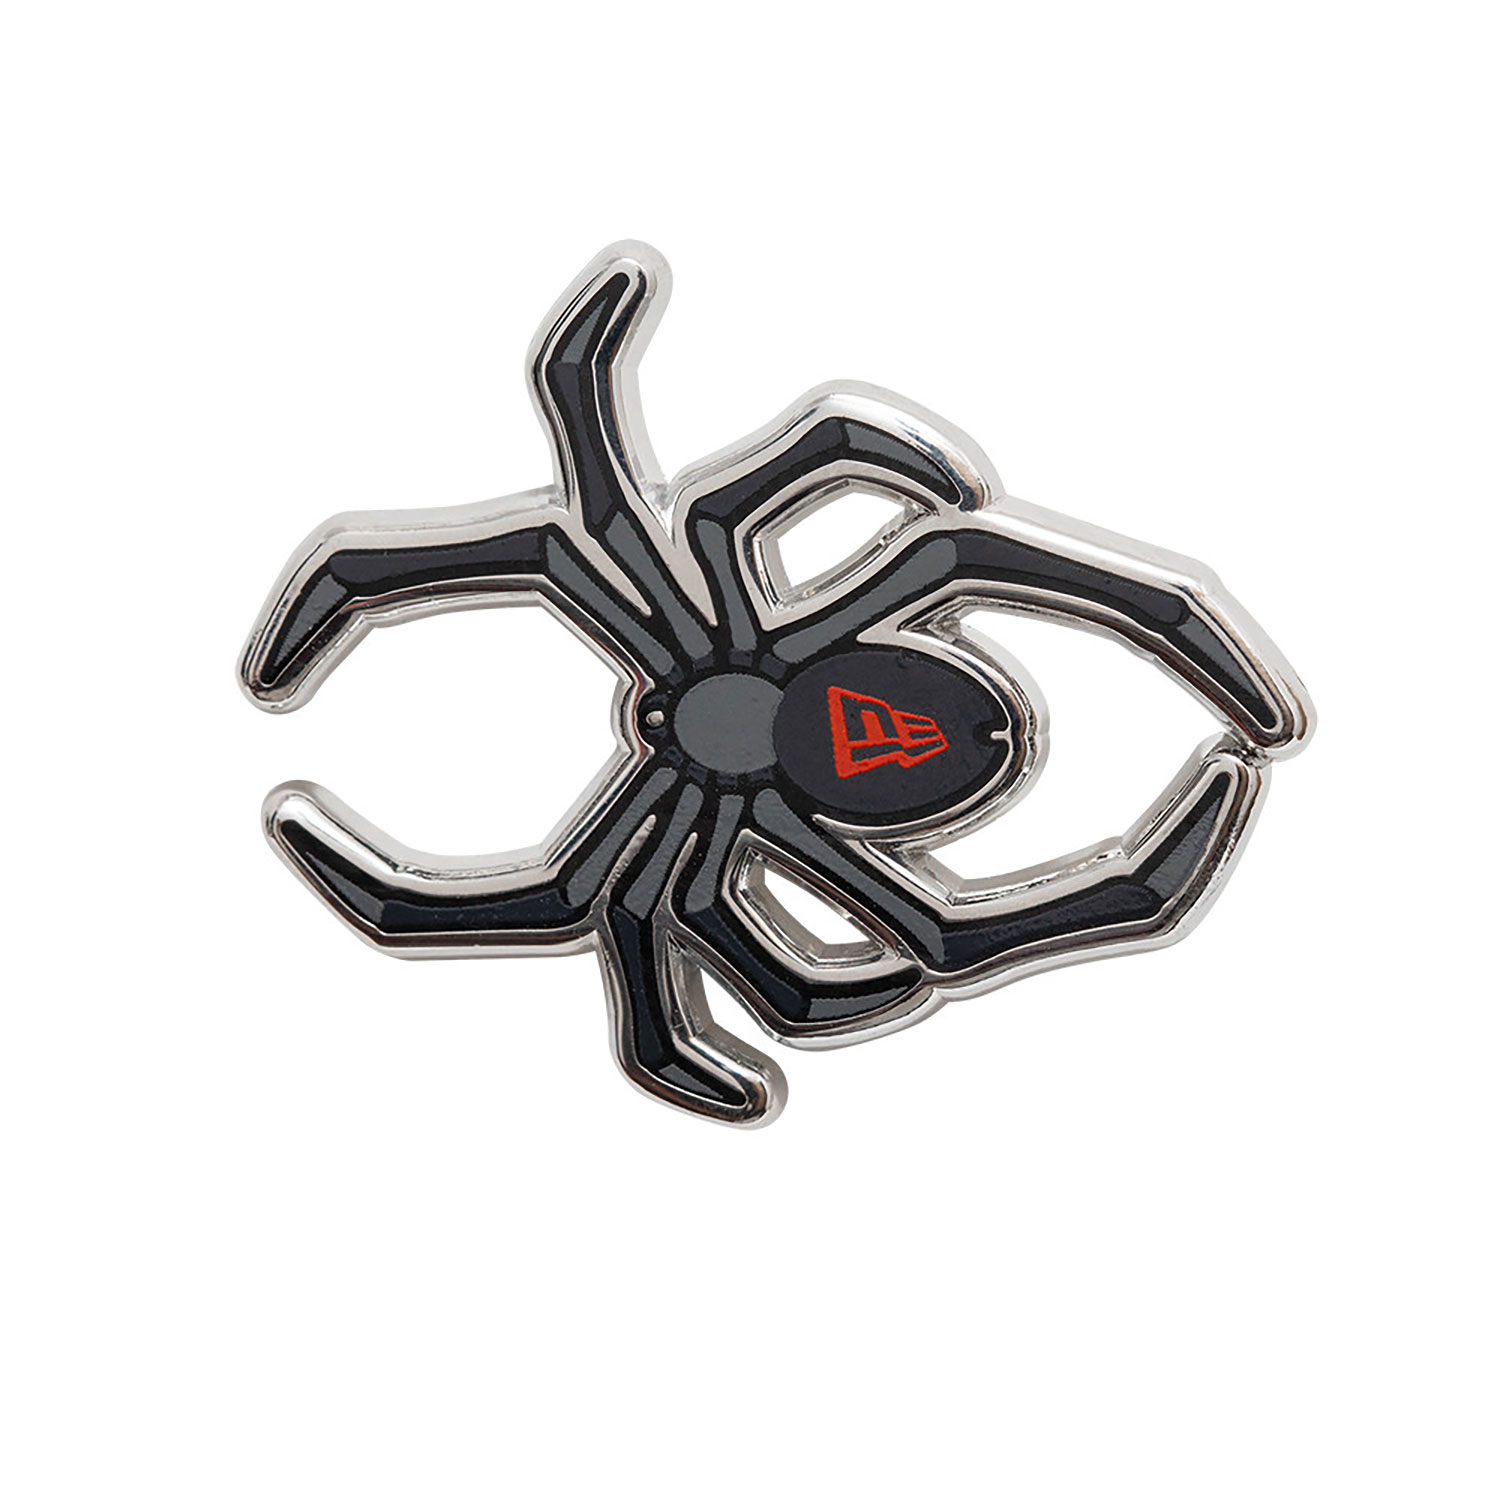 New Era Halloween Spider Black Pin Badge